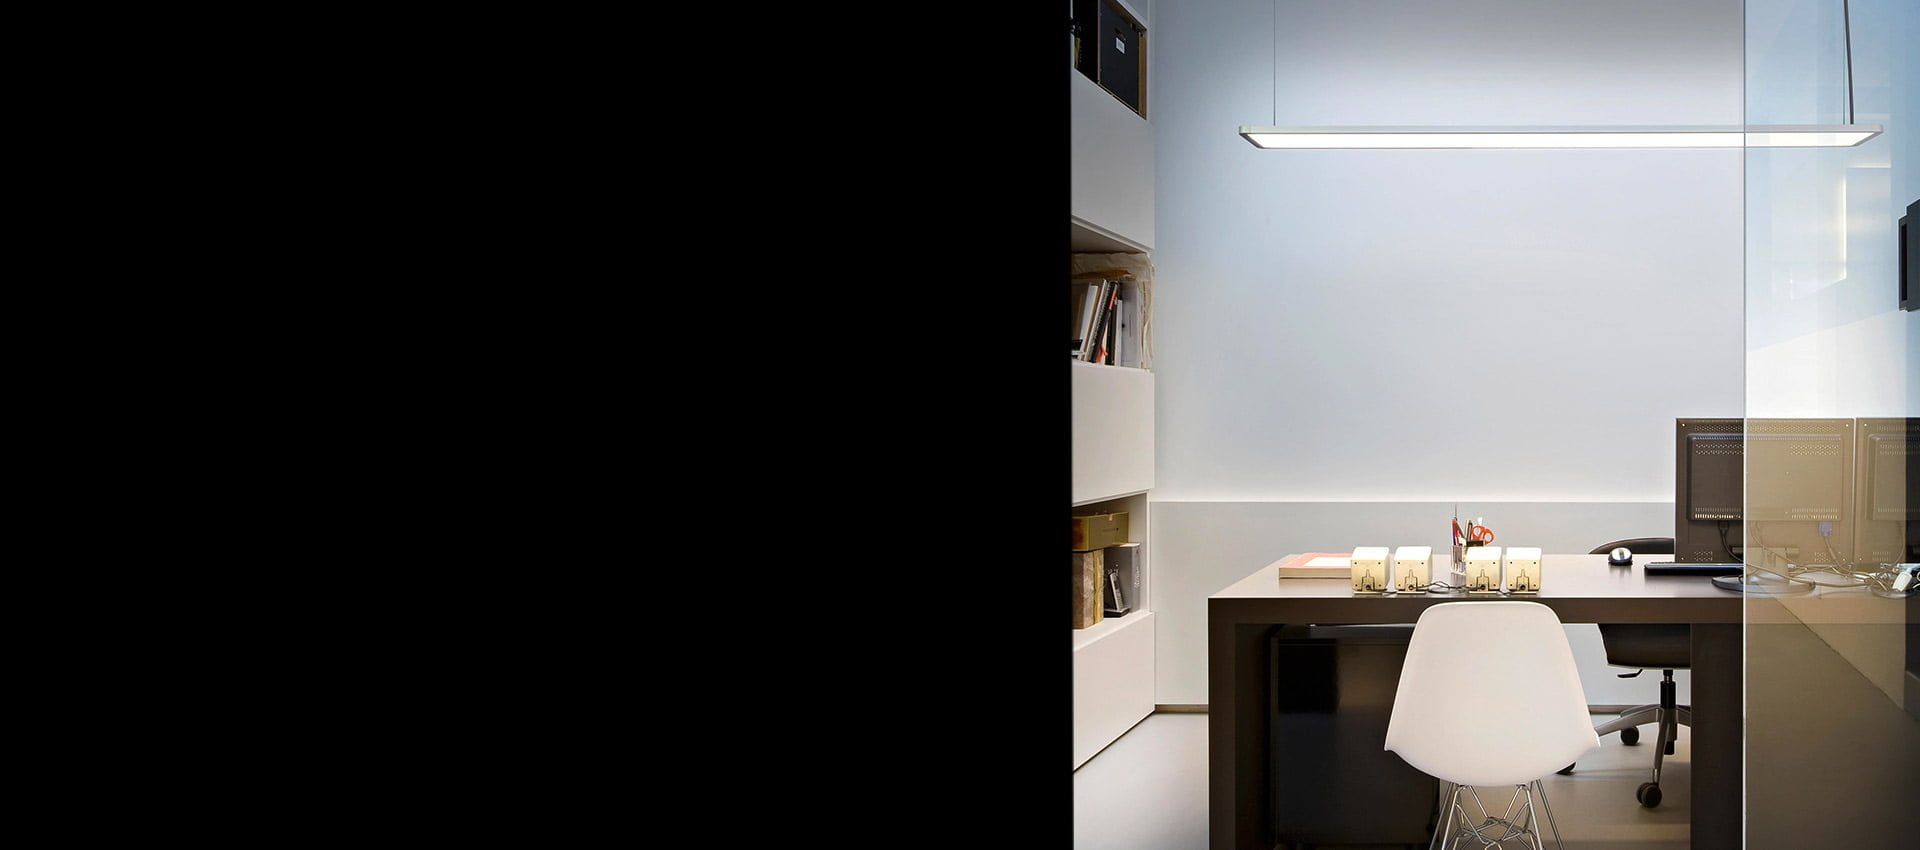 Panouri LED iluminat office Super Flat, Flos